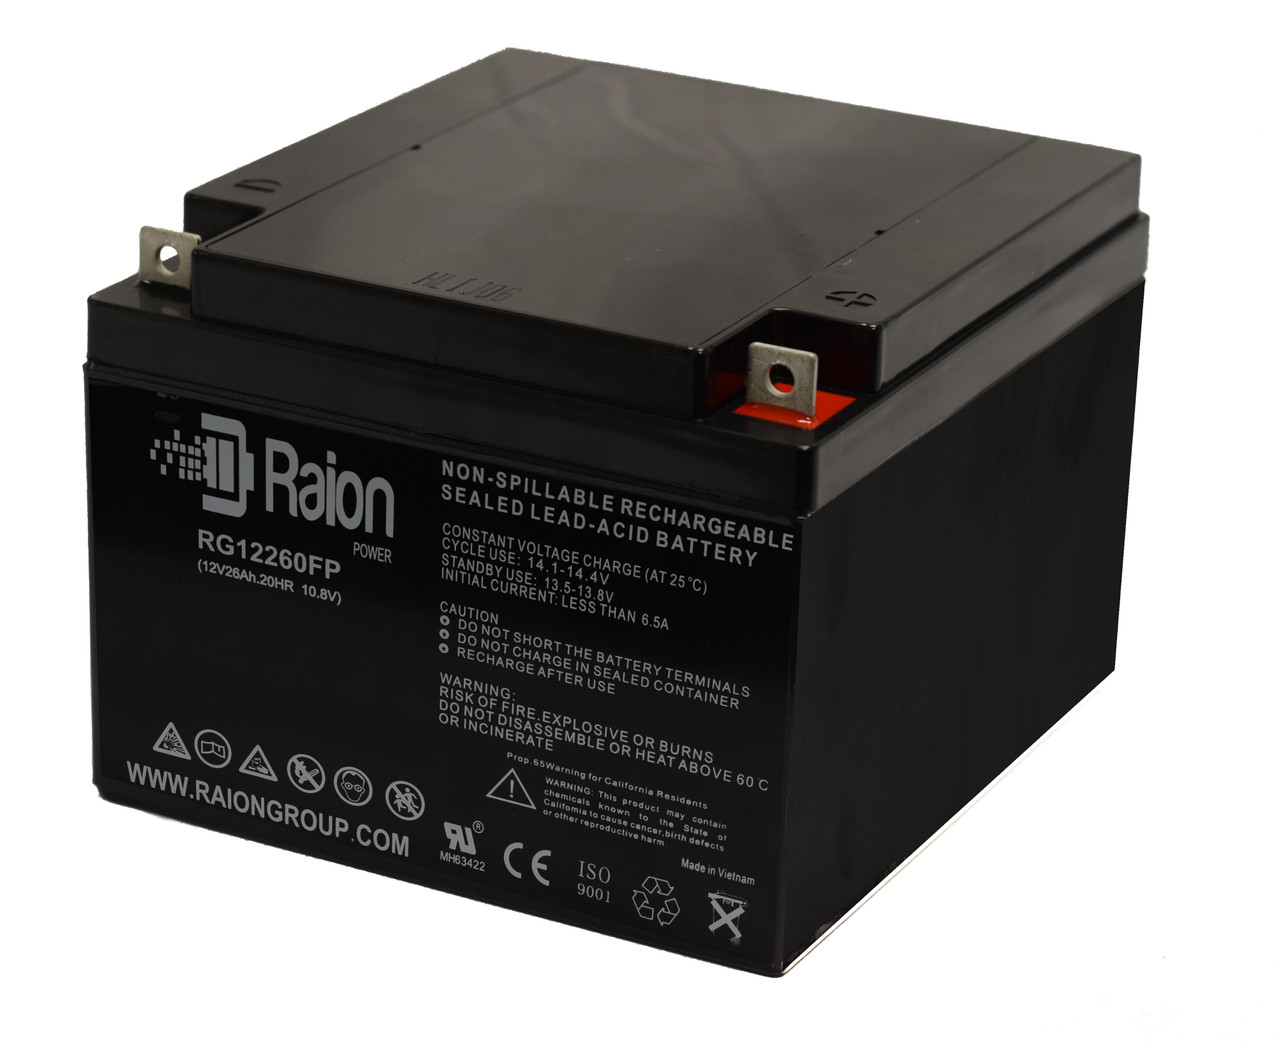 Raion Power Replacement 12V 26Ah Battery for Picker International Explorer Xray - 1 Pack